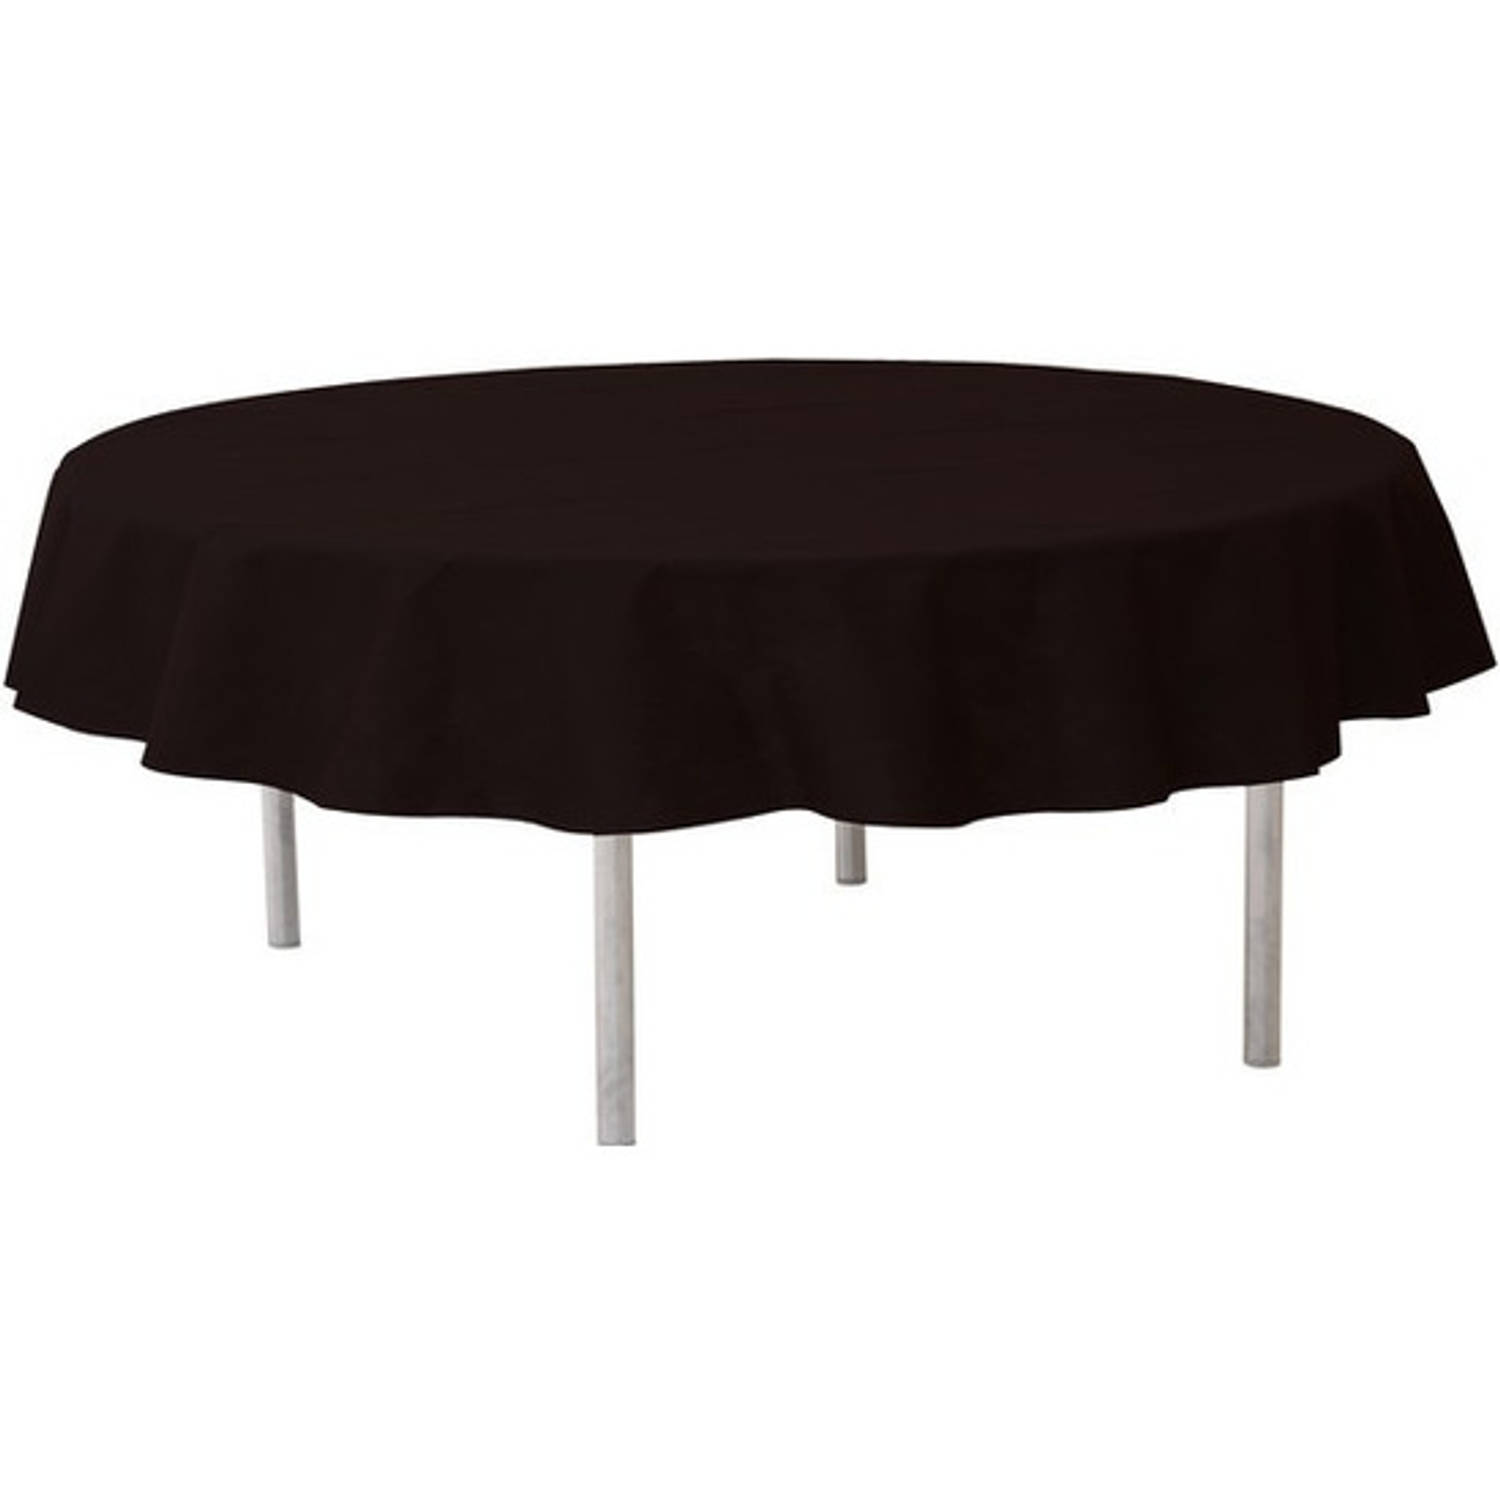 Zwart tafelkleed/tafellaken 240 cm non woven polypropyleen - Blokker